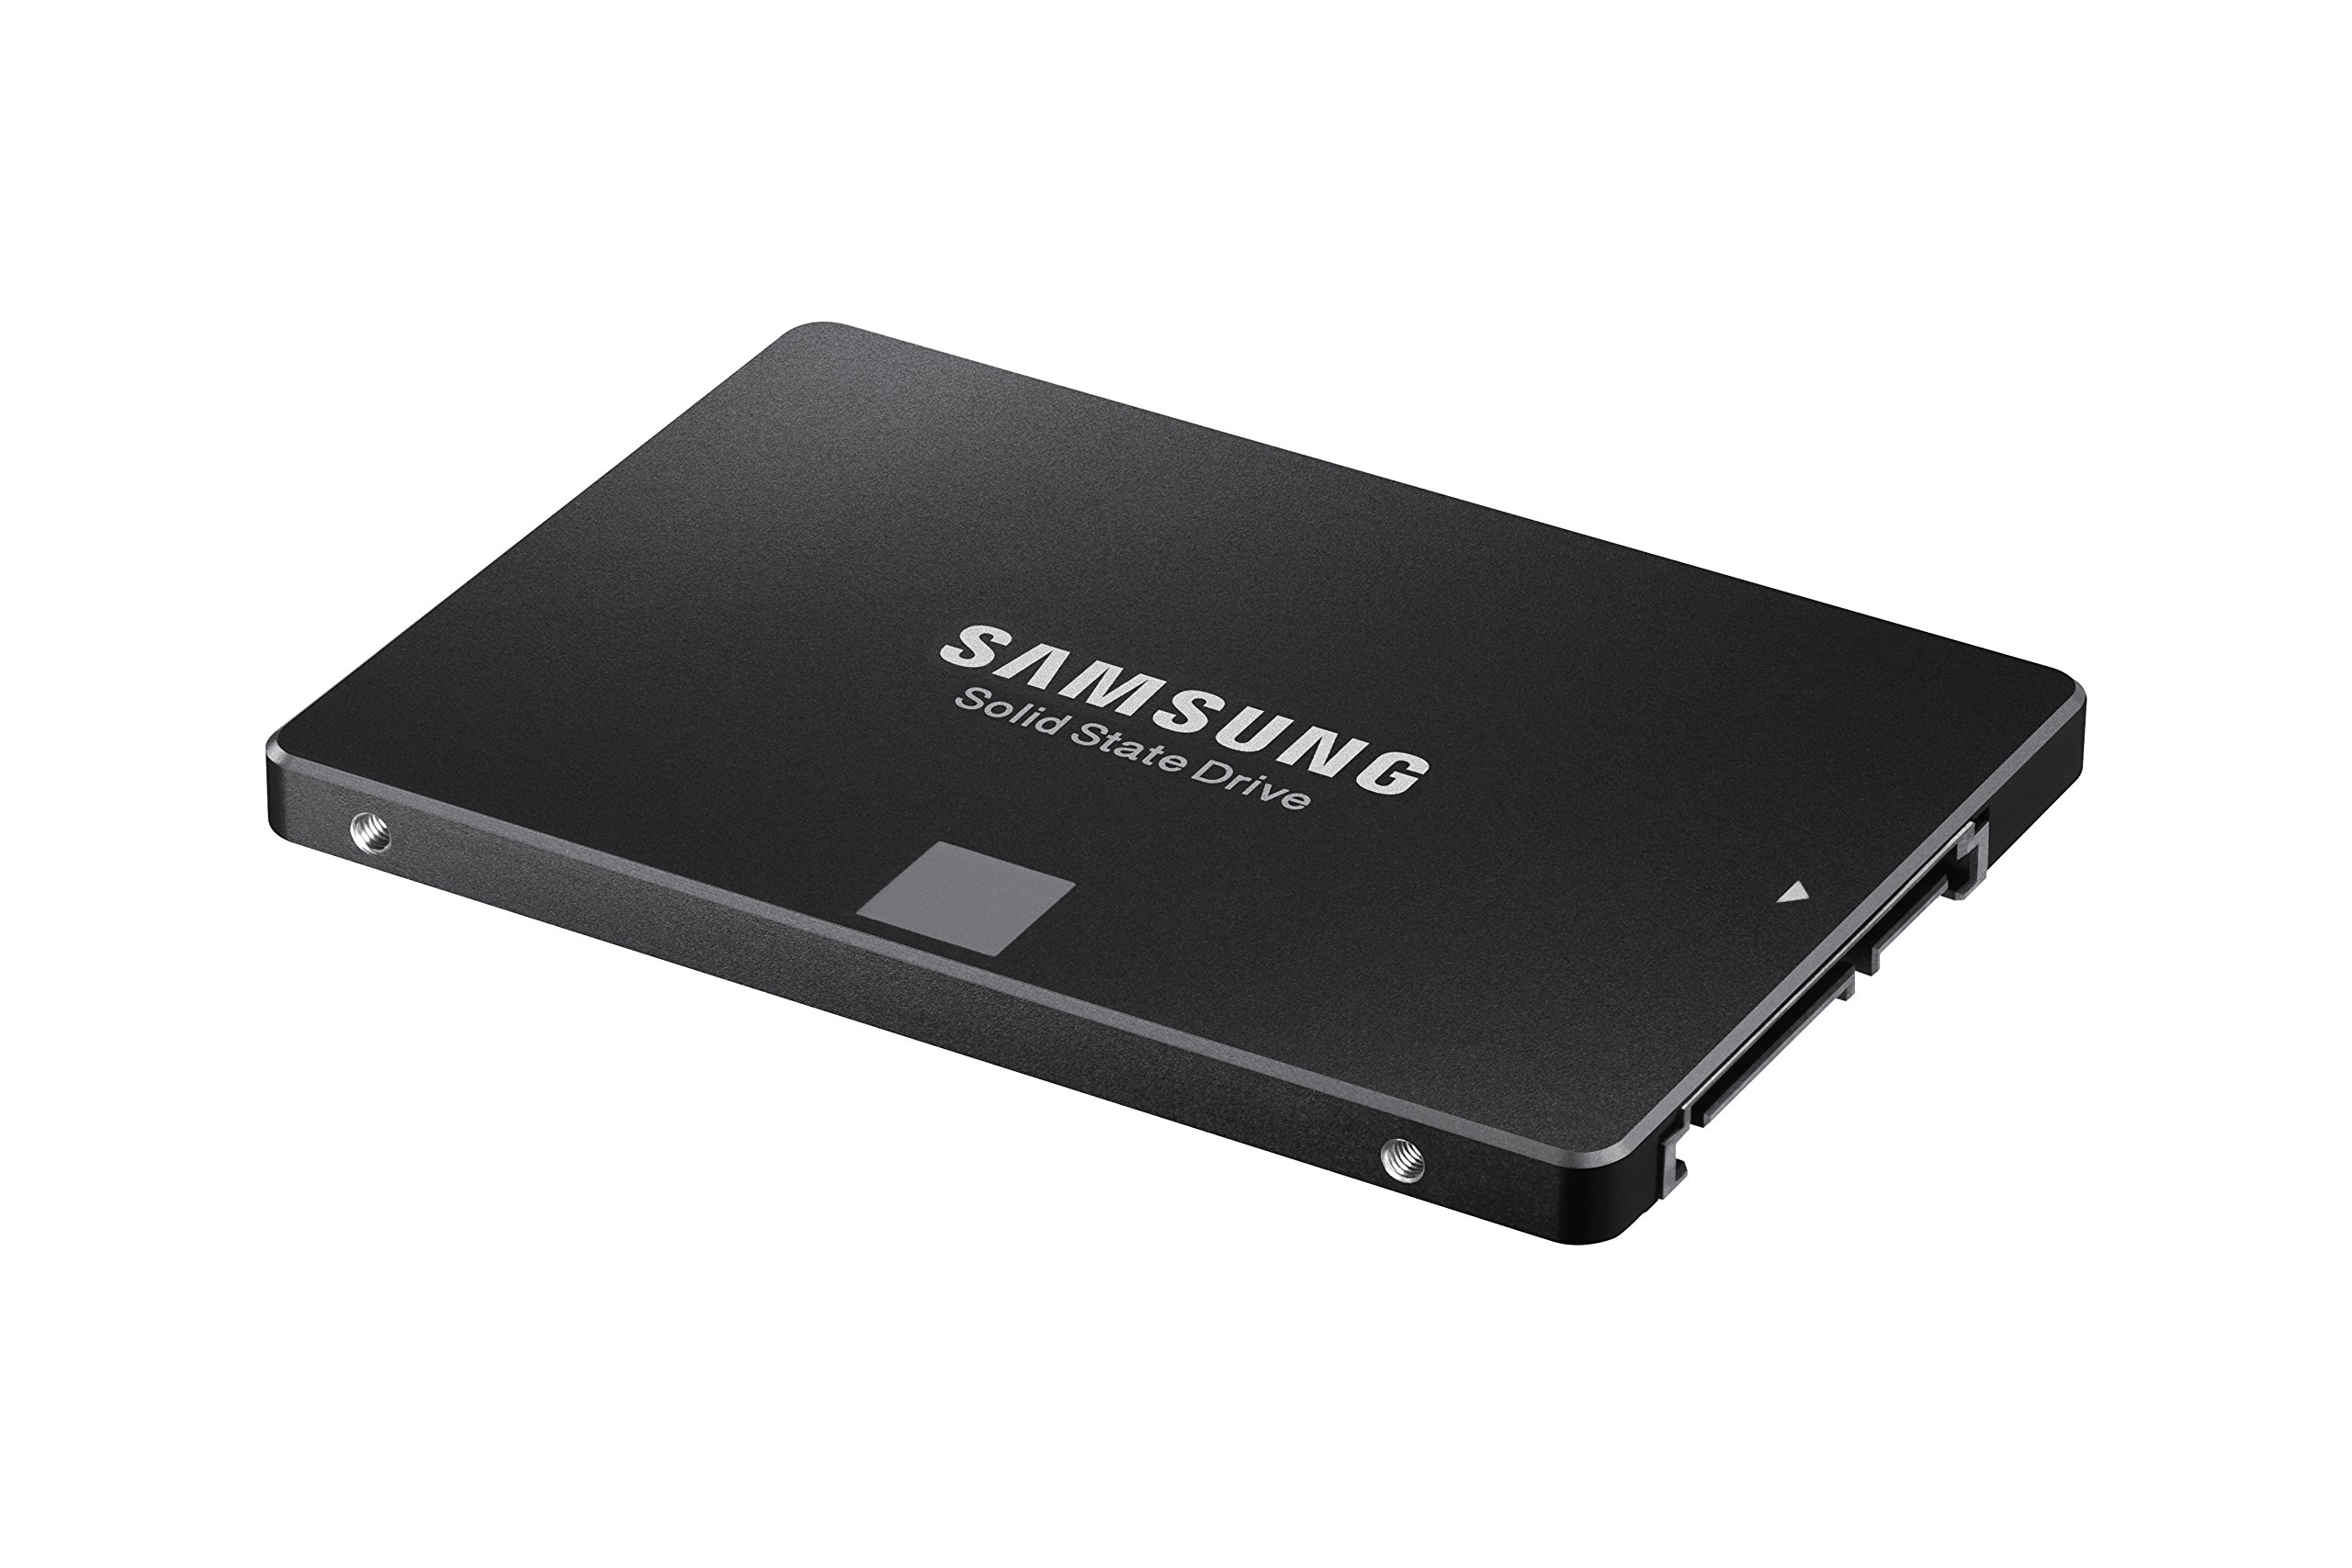 SAMSUNG 850 EVO 500GB 2.5-Inch SATA III Internal SSD (MZ-75E500B/AM)